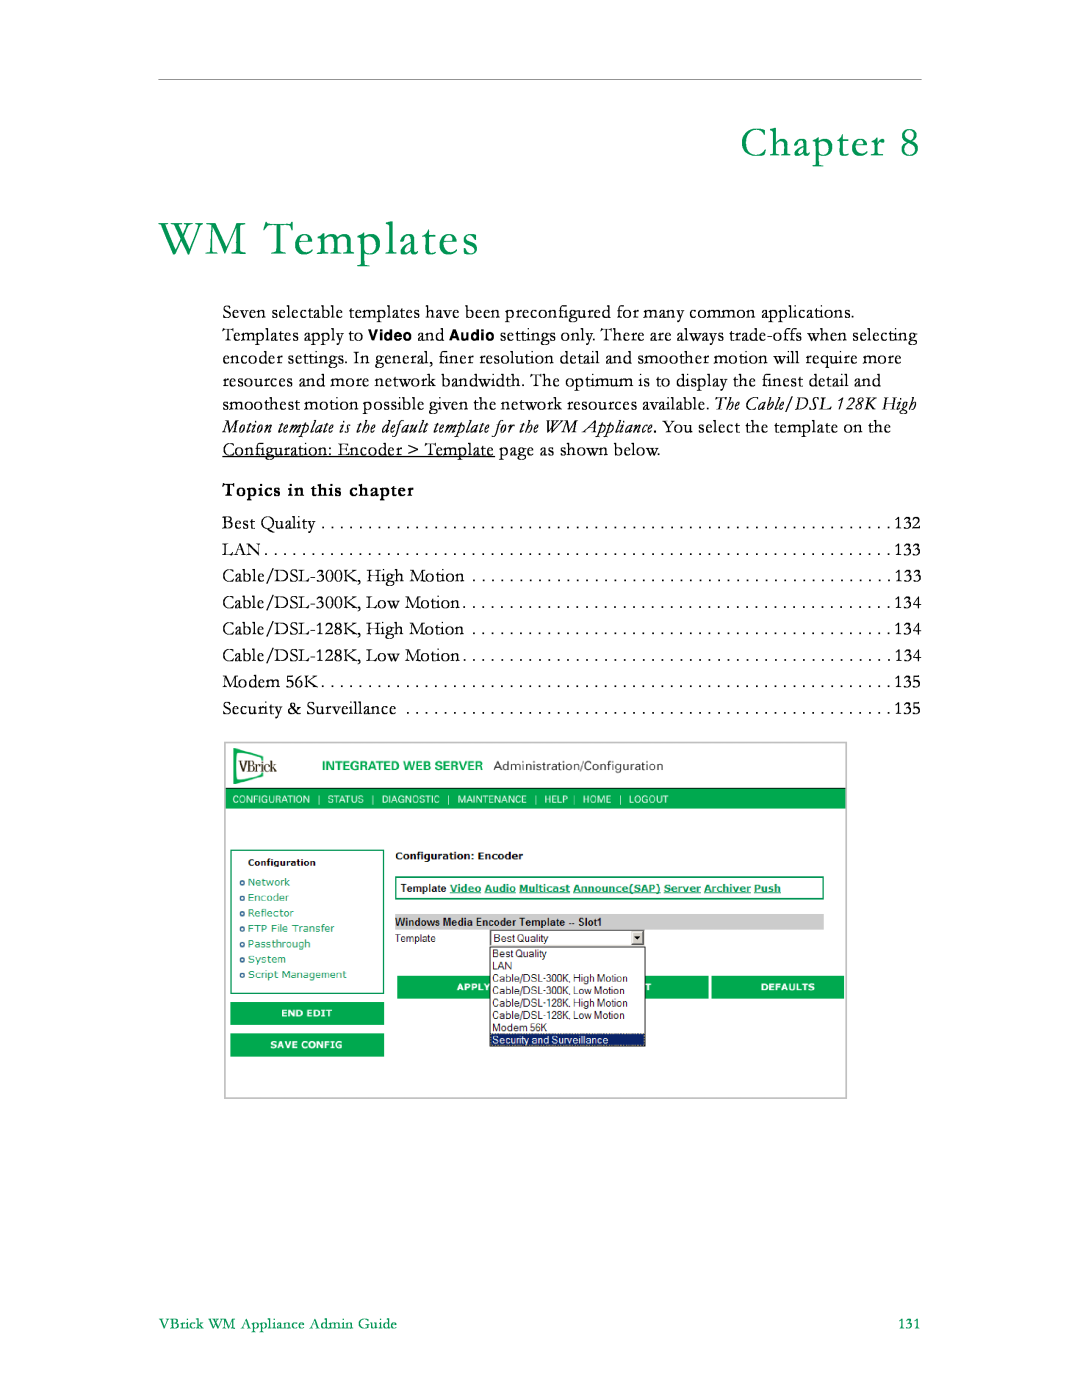 VBrick Systems VB6000, VB4000, VB5000 manual WM Templates, Chapter, Topics in this chapter 